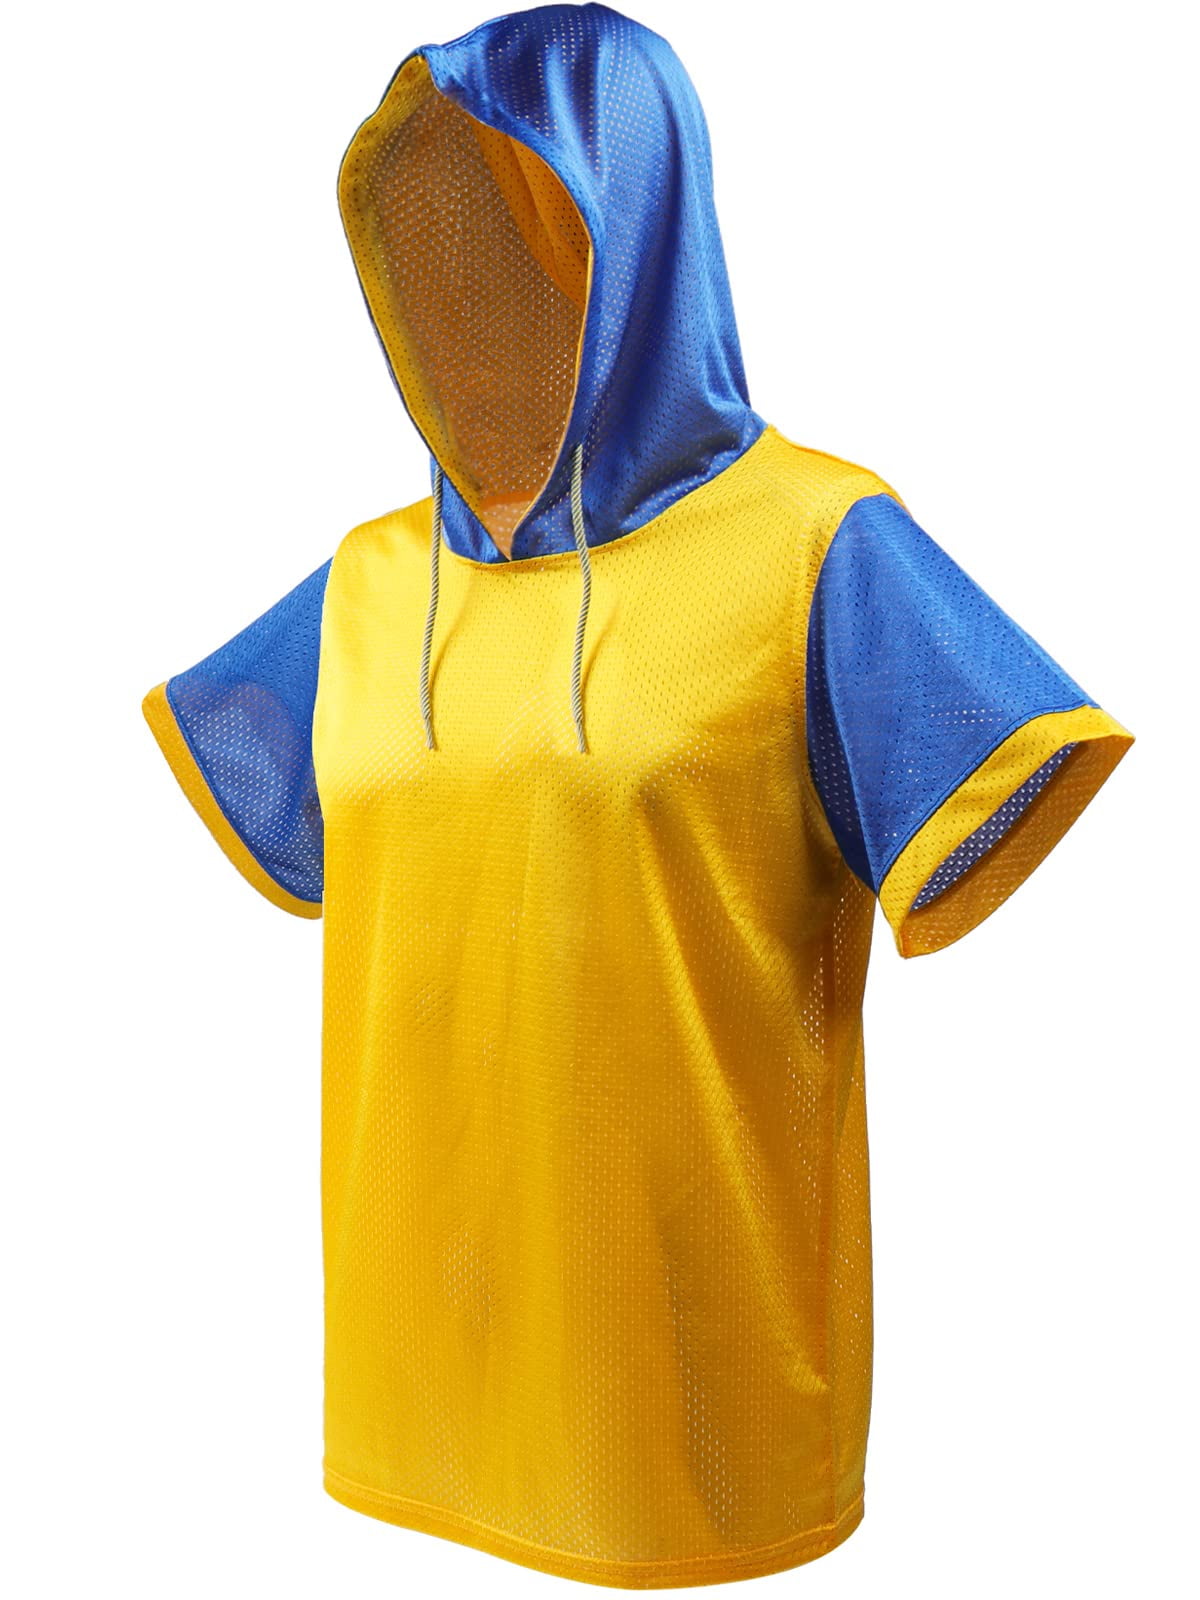 hooded basketball jersey